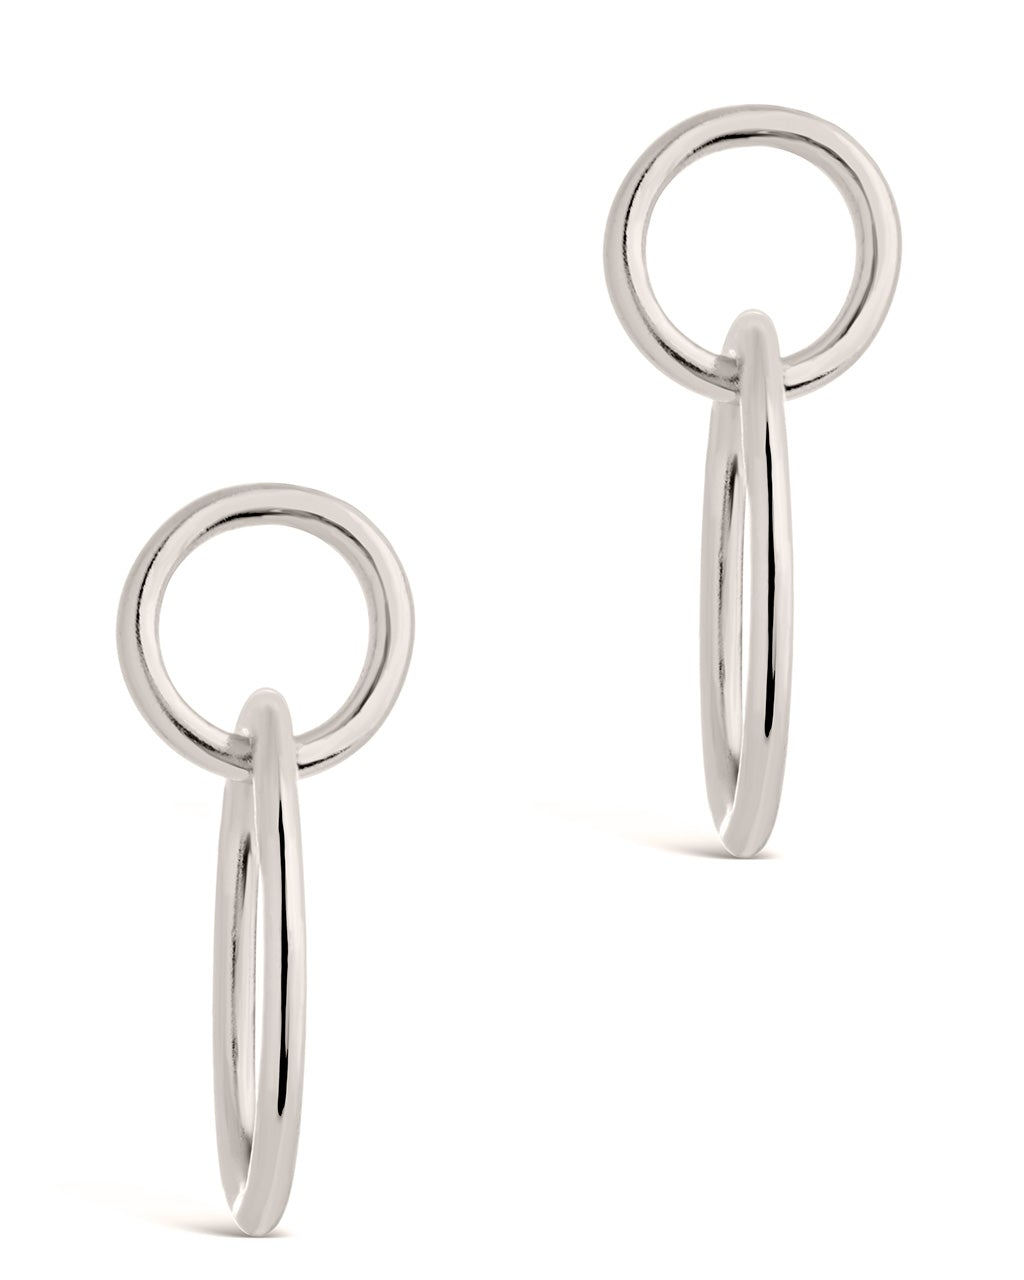 Sterling Silver Dangling Heart Earrings, 30mm - LooptyHoops